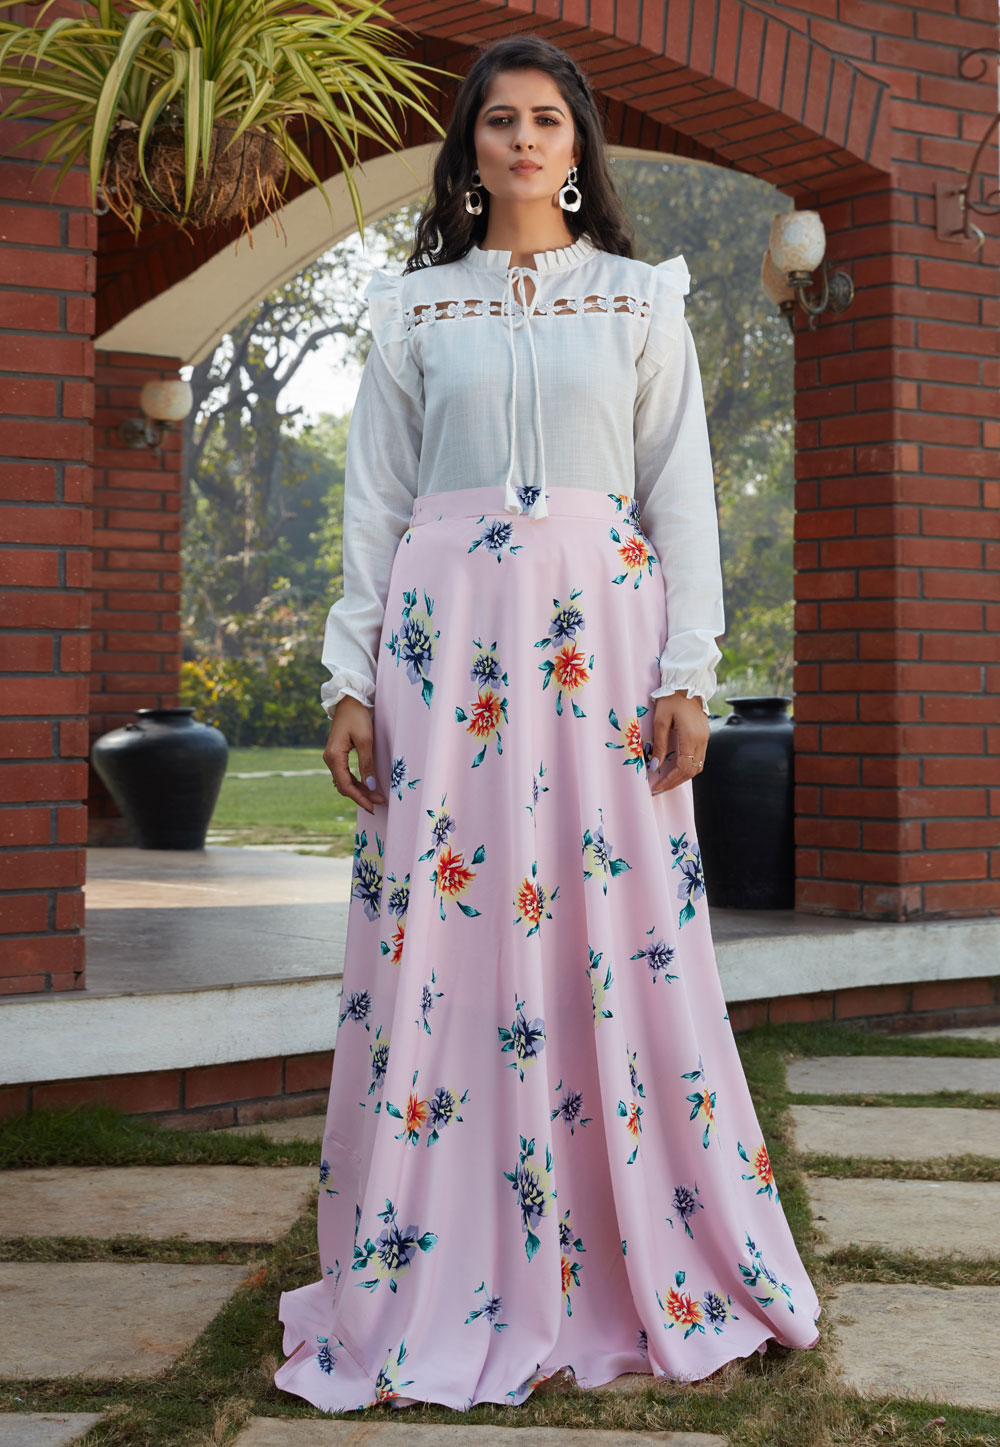 New Designer Wedding Wear Crop Top Embrodery Work Lehenga Choli With Jacket  | eBay